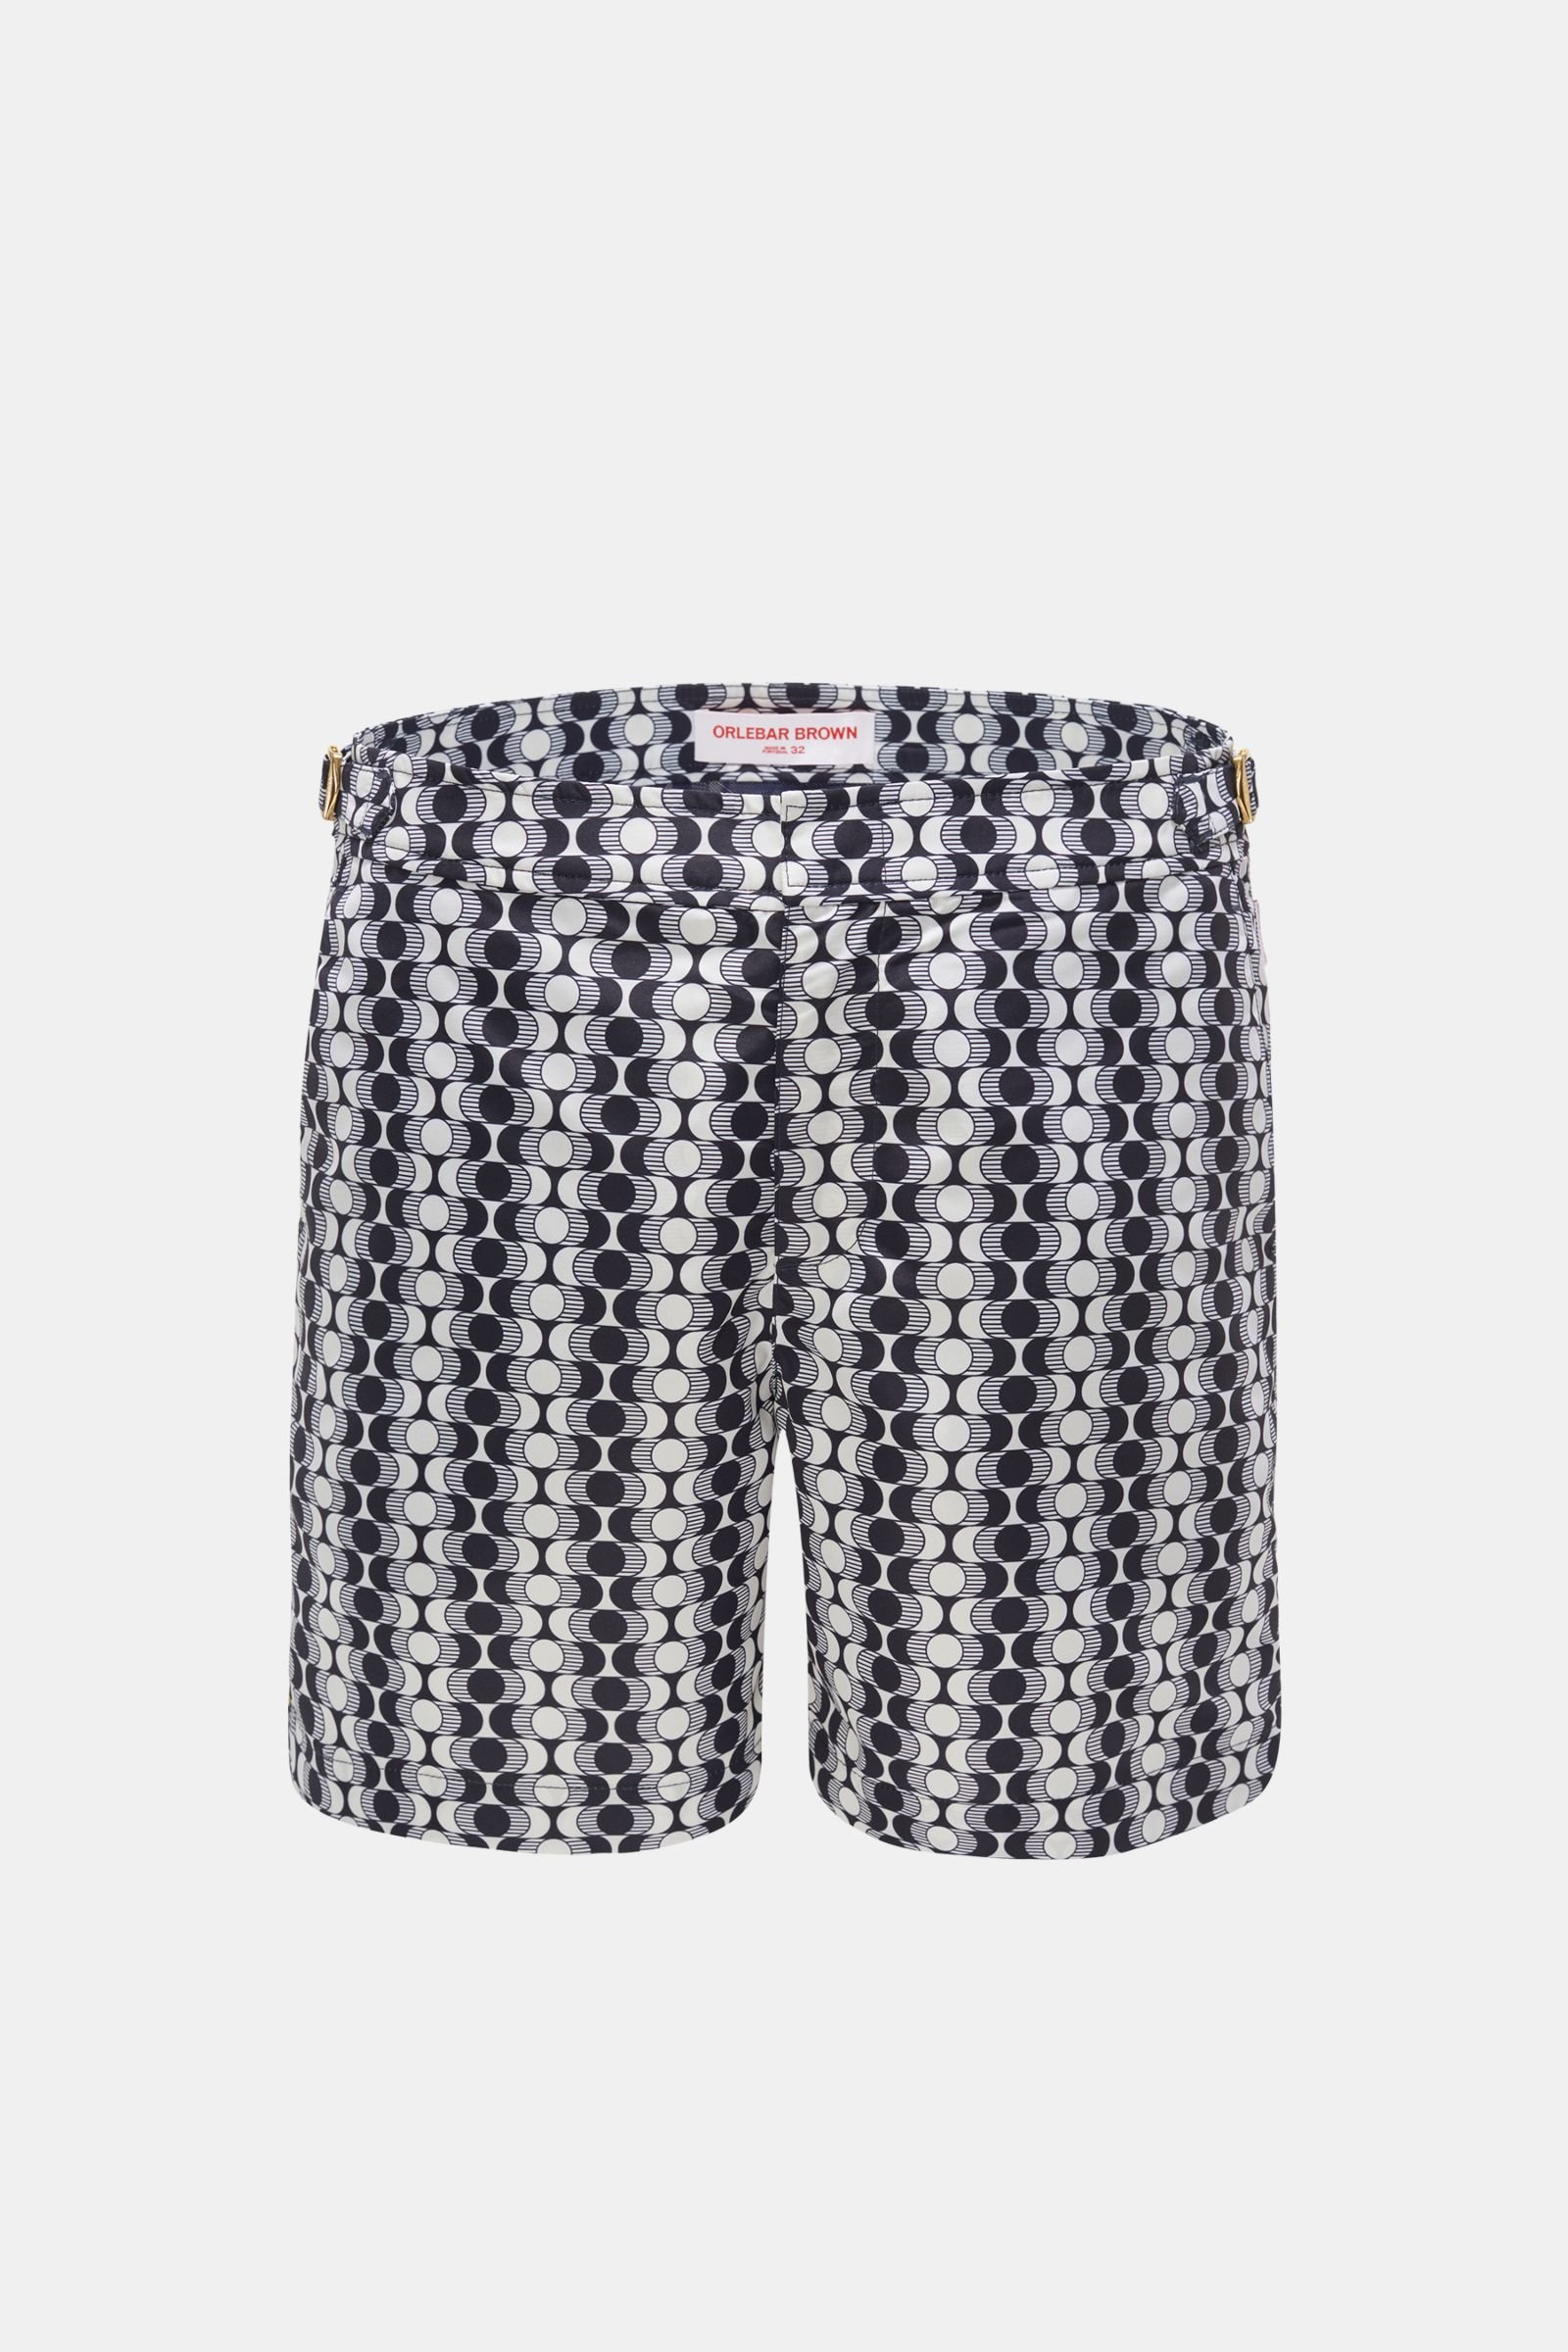 Swim shorts 'Bulldog Caliso' navy/white patterned